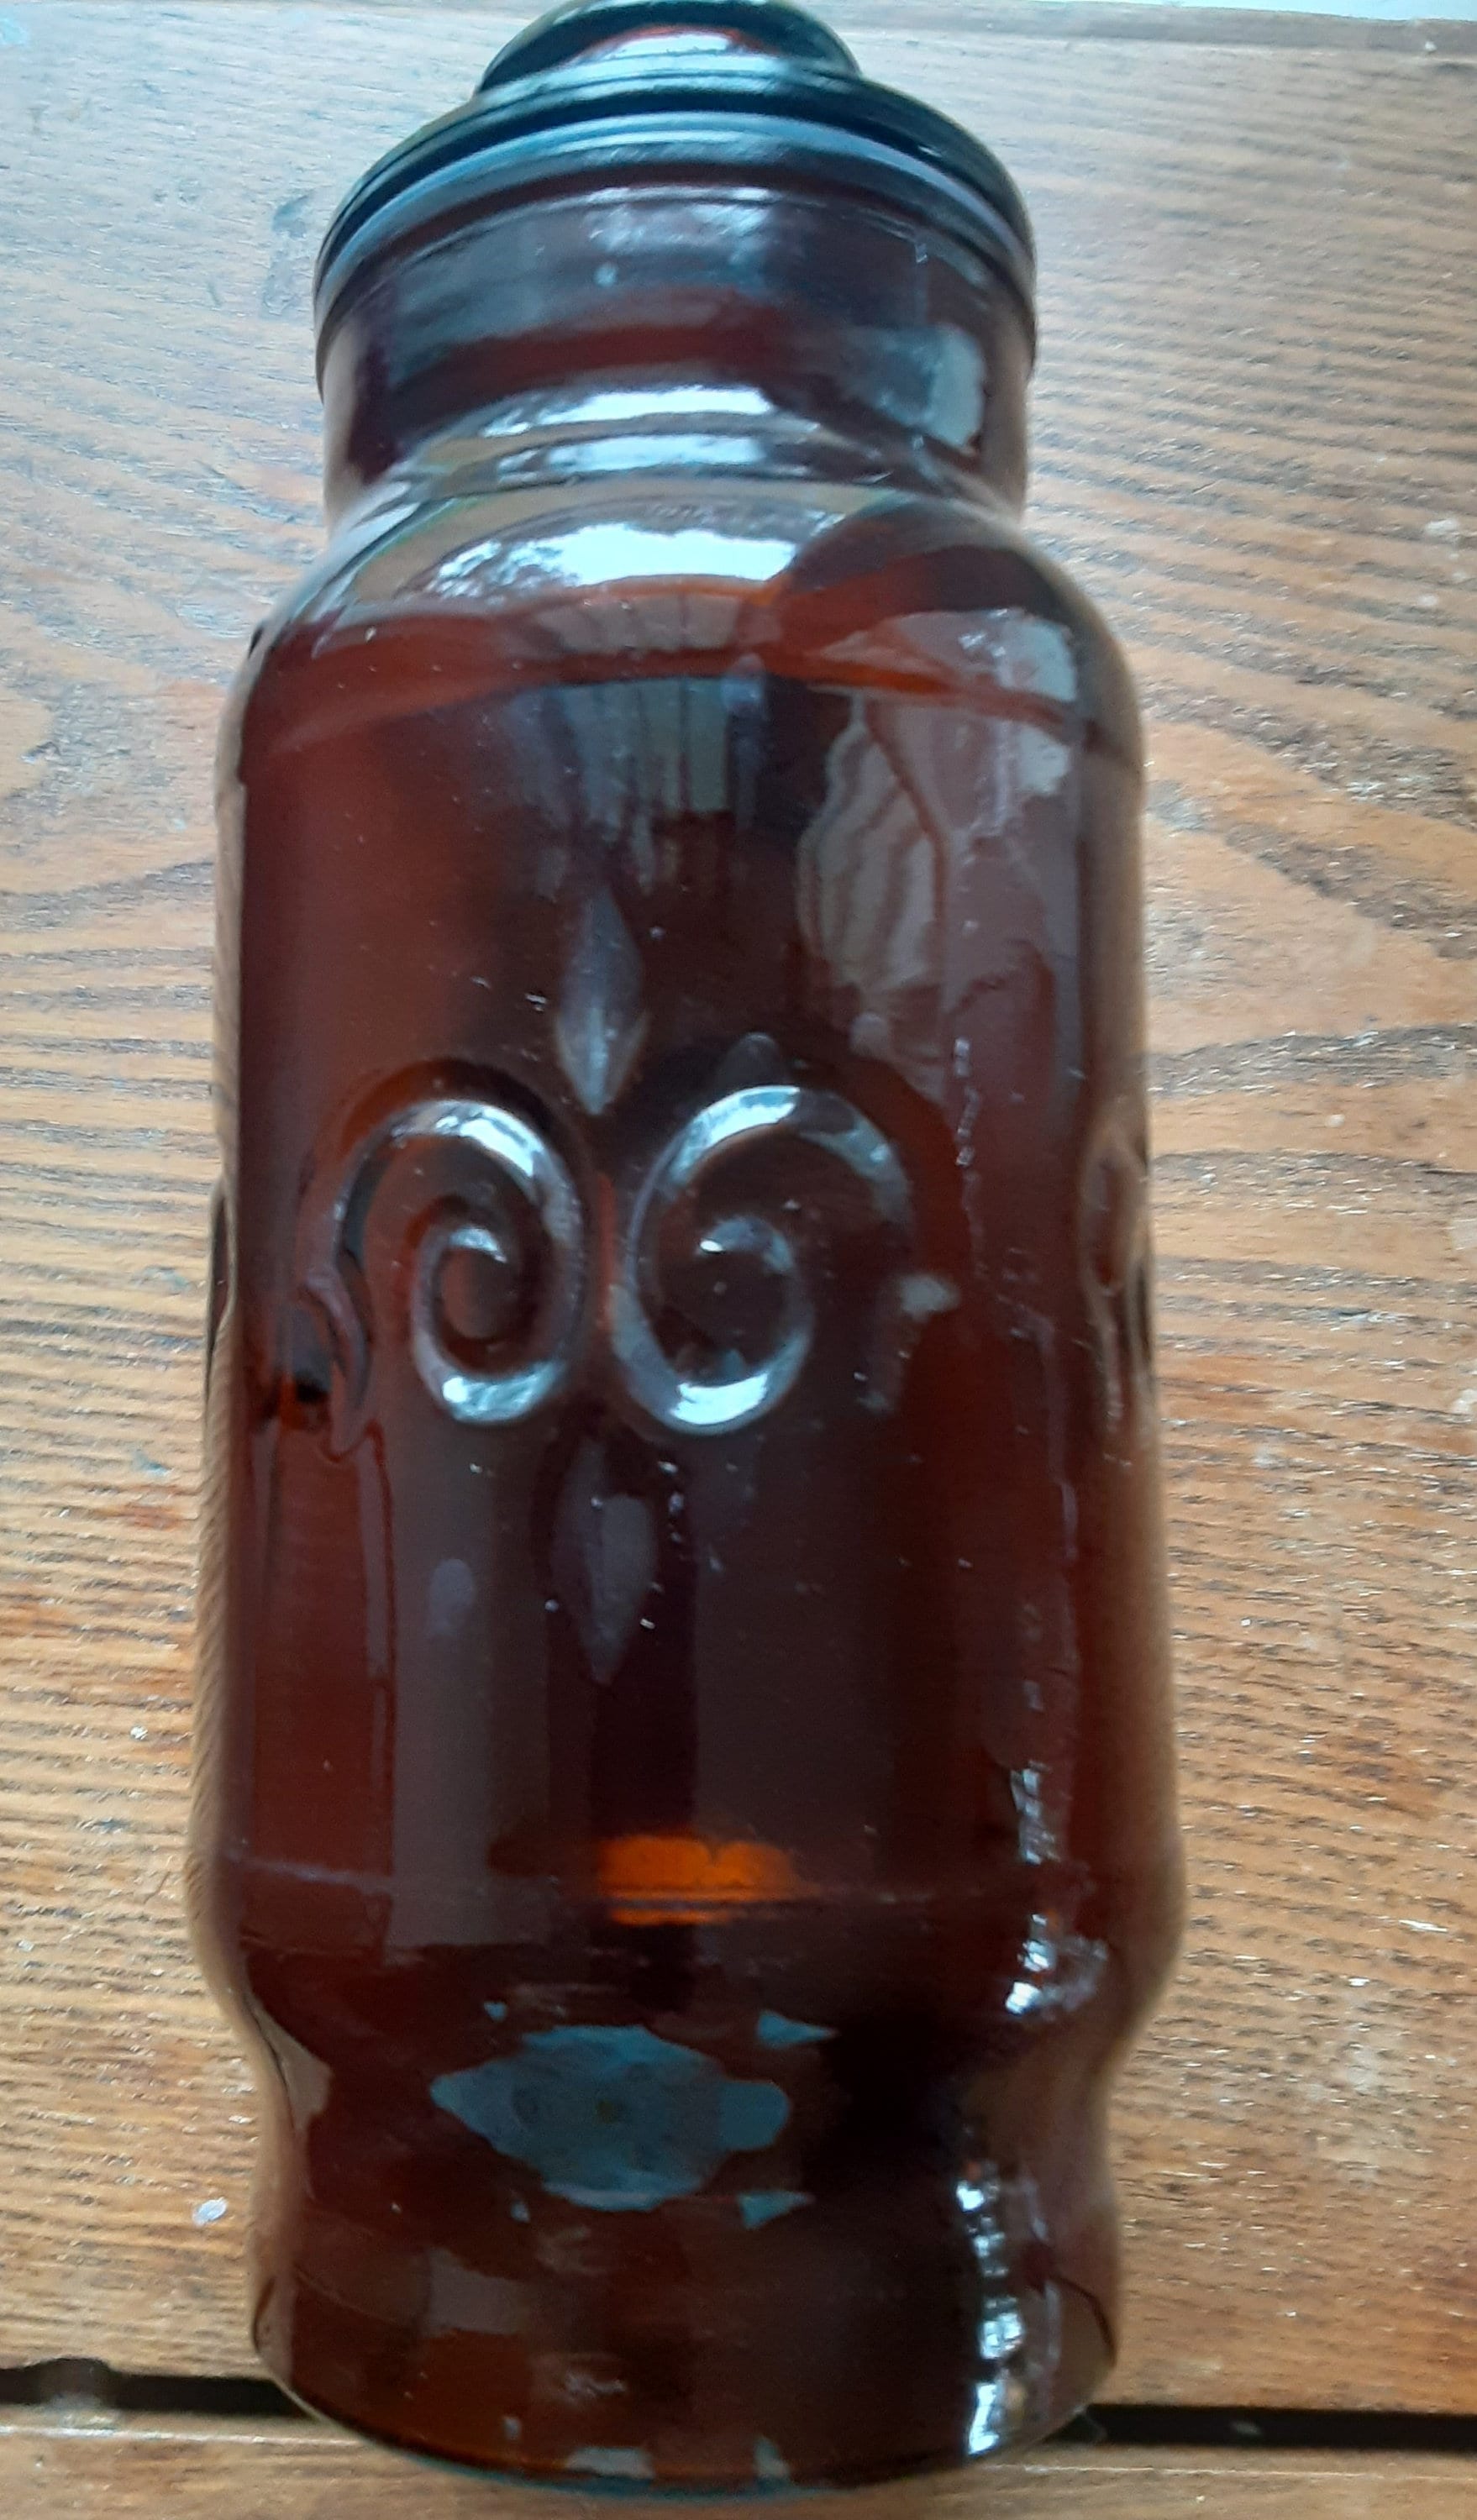 Pream Creamer Jar 7 ounce Coffee Creamer Brown Bottle Vintage Empty Prop